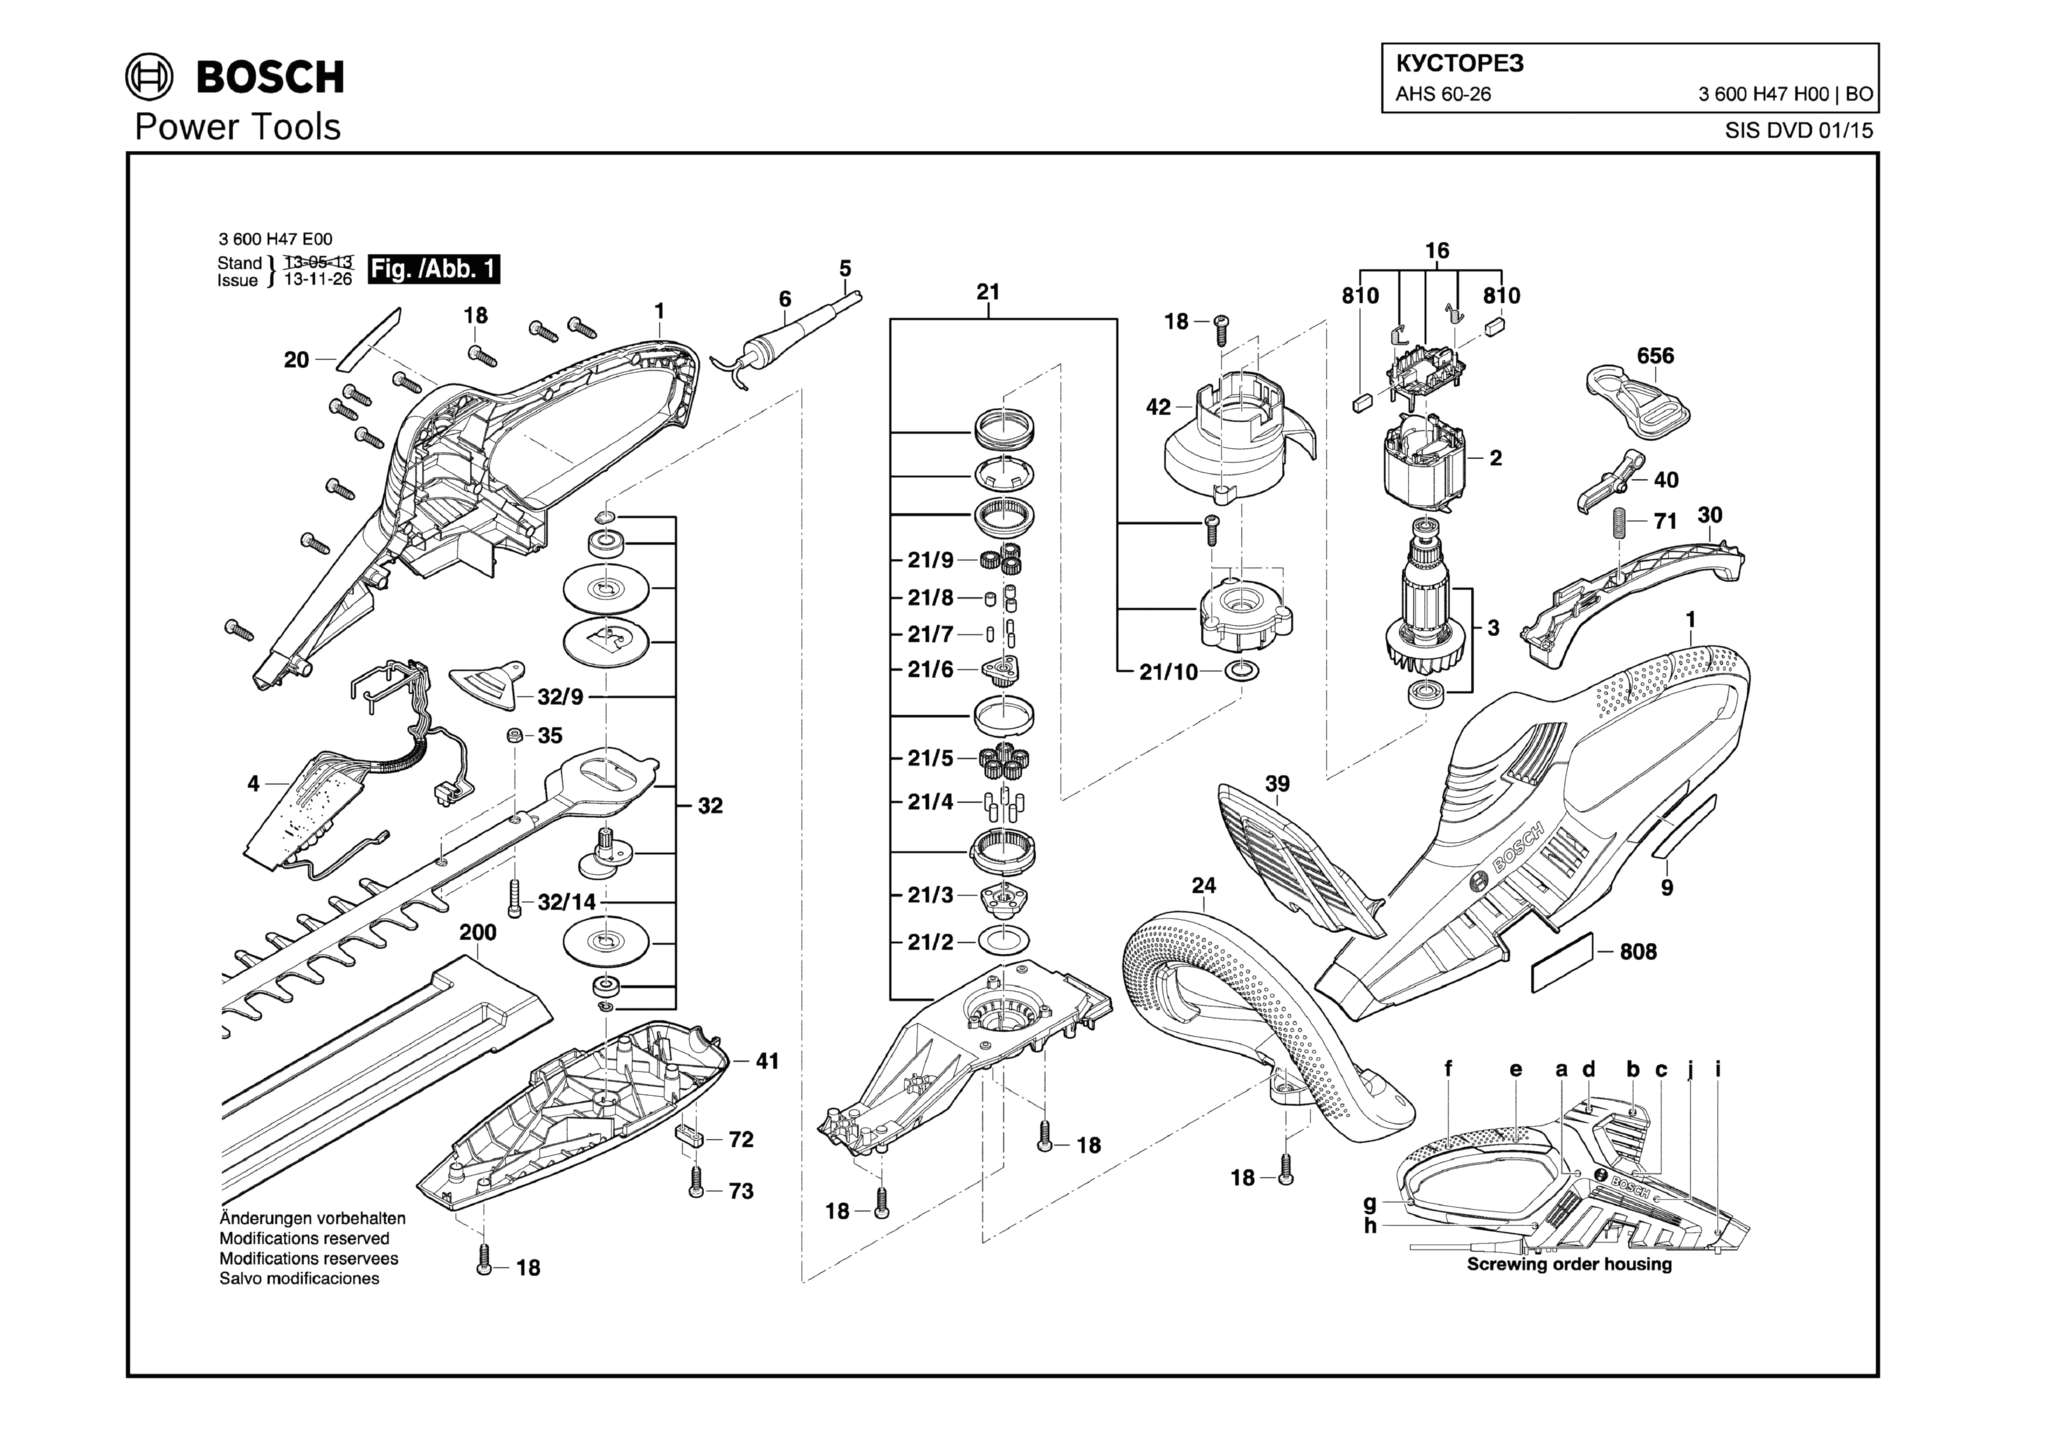 Запчасти, схема и деталировка Bosch AHS 60-26 (ТИП 3600H47H00)